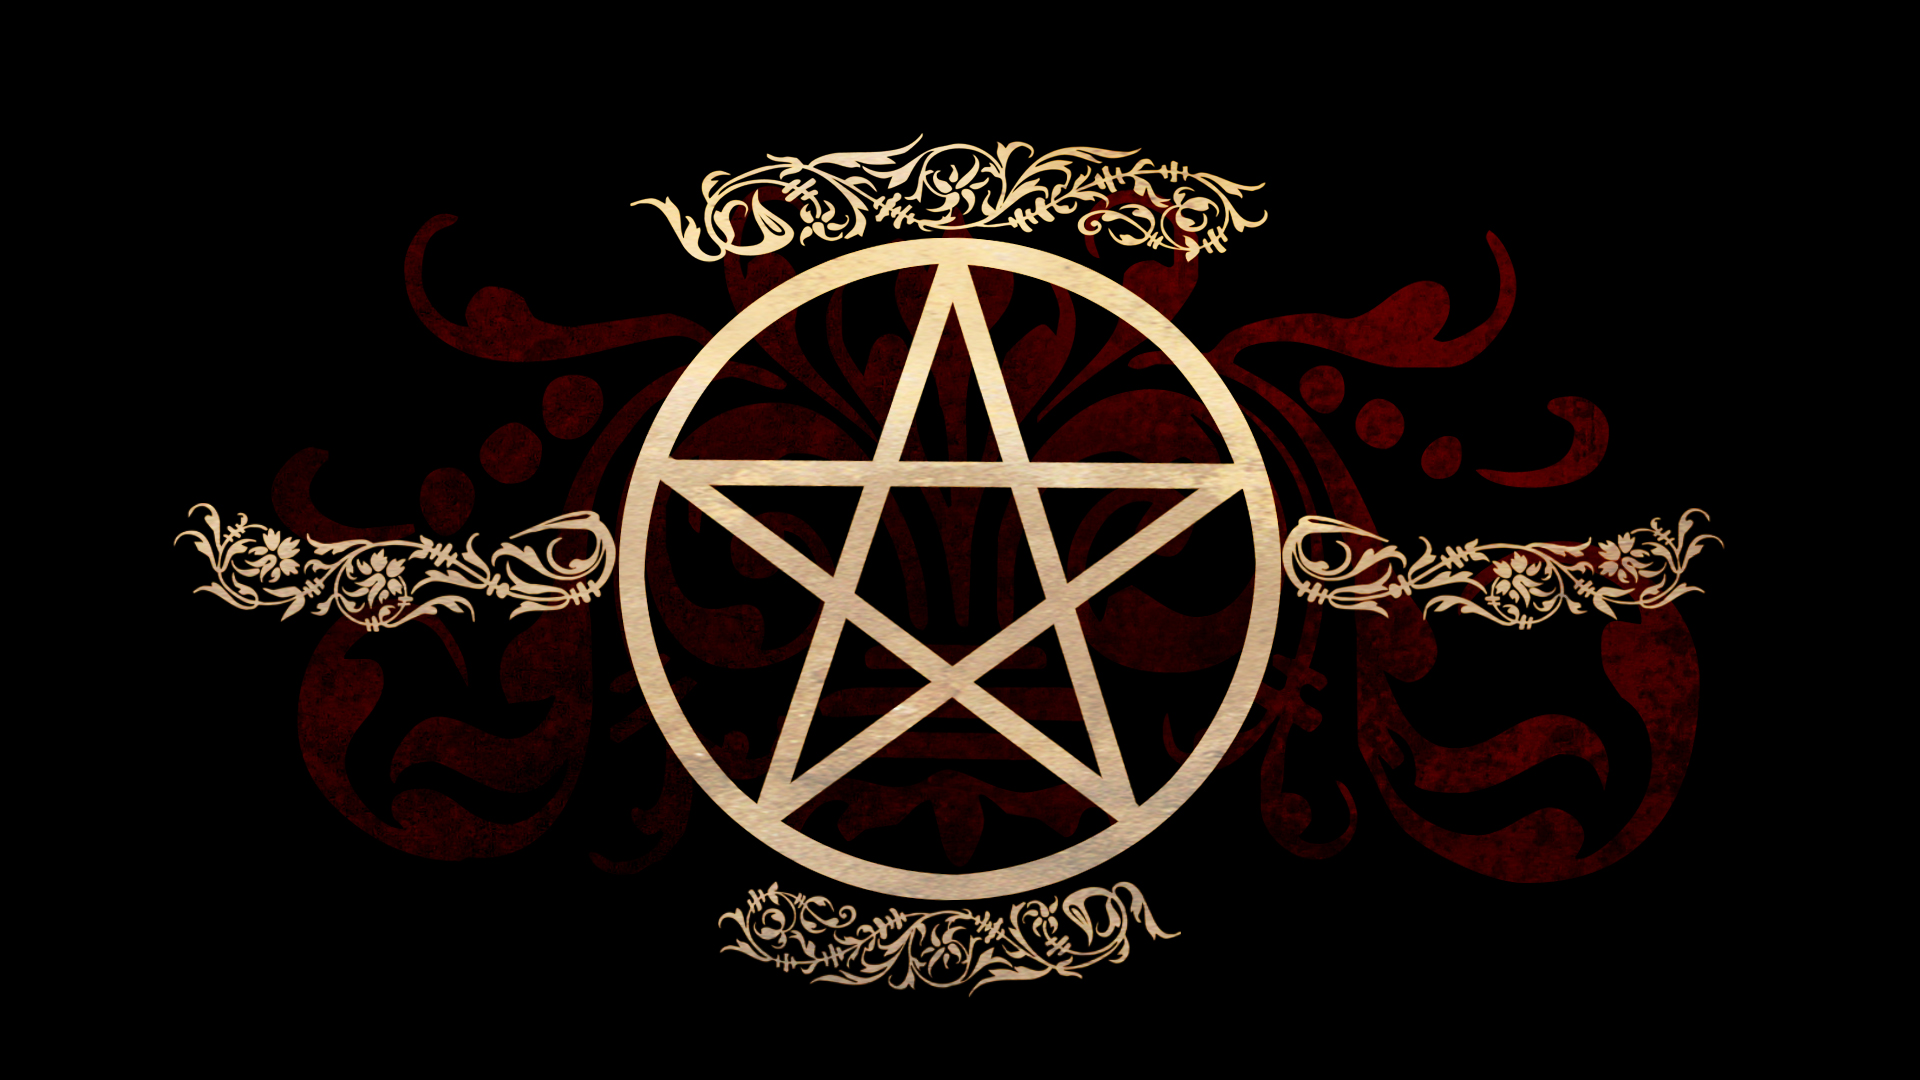 Pagan Pentacle Symbols images 1920x1080